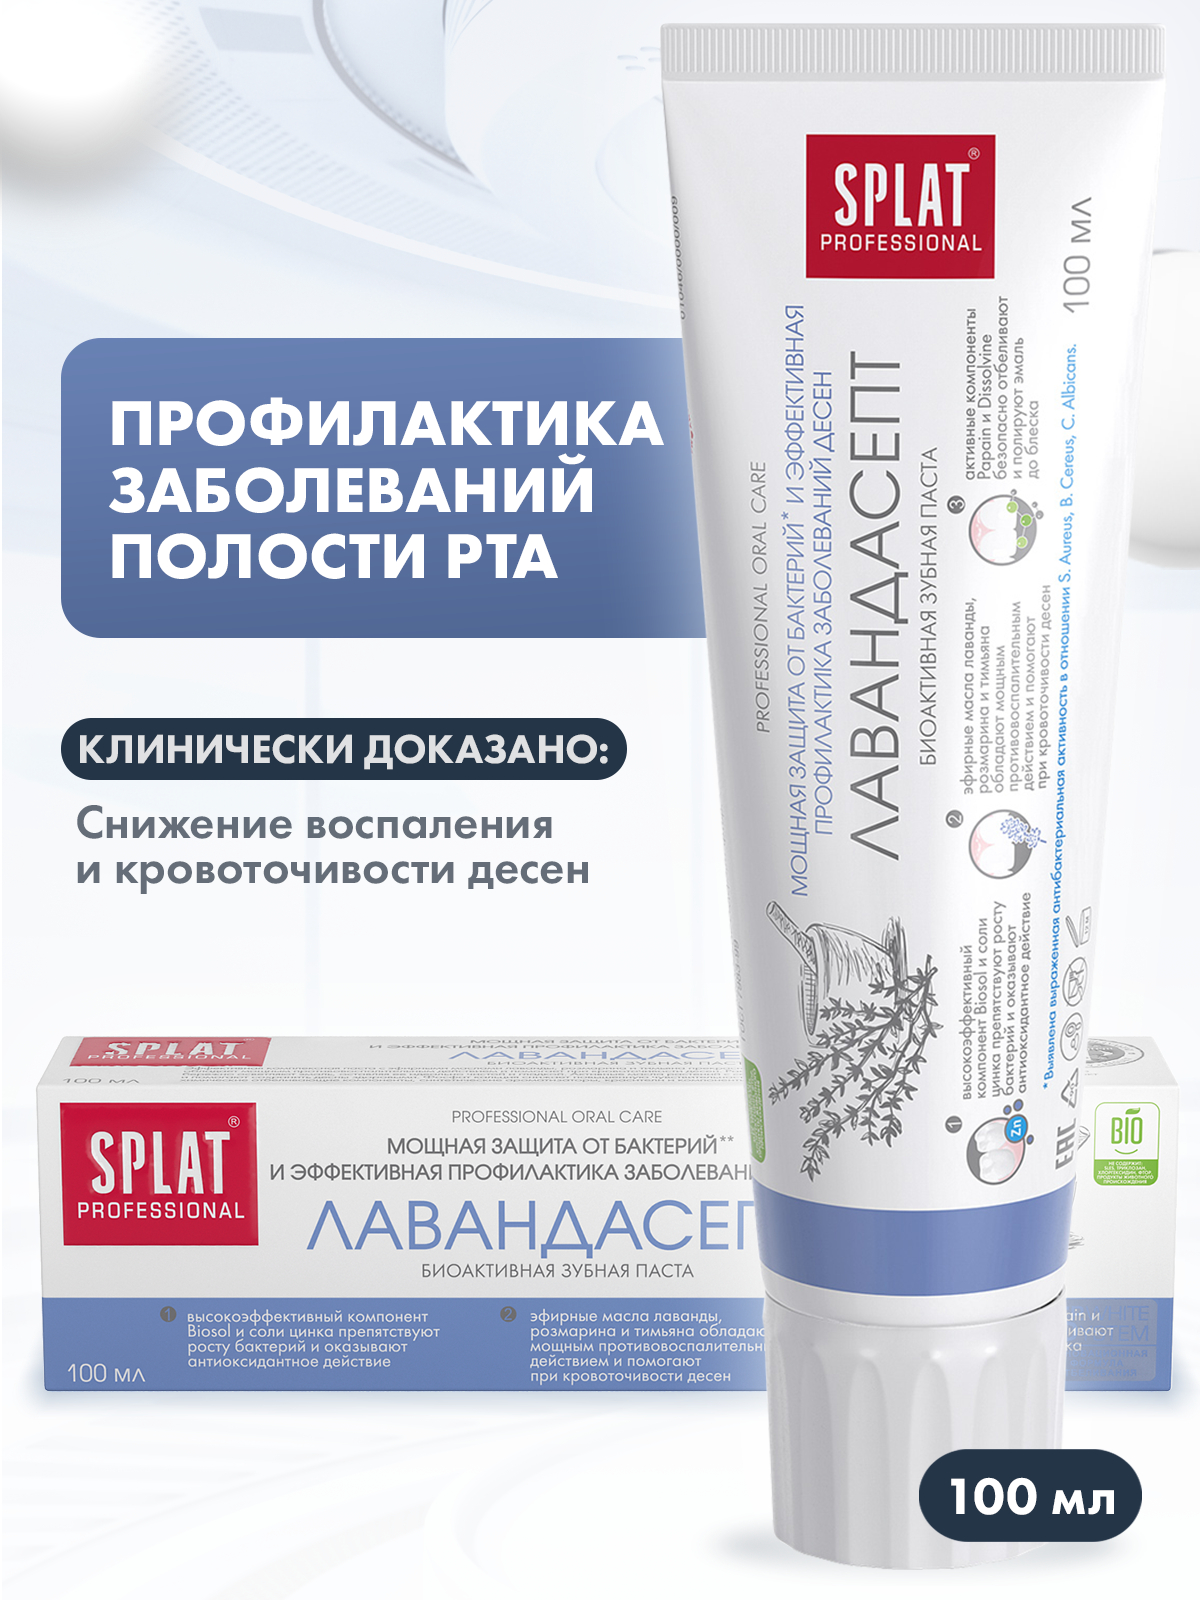 Зубная паста SPLAT Professional Лавандасепт 100 мл splat зубная паста wonder white бережное отбеливание